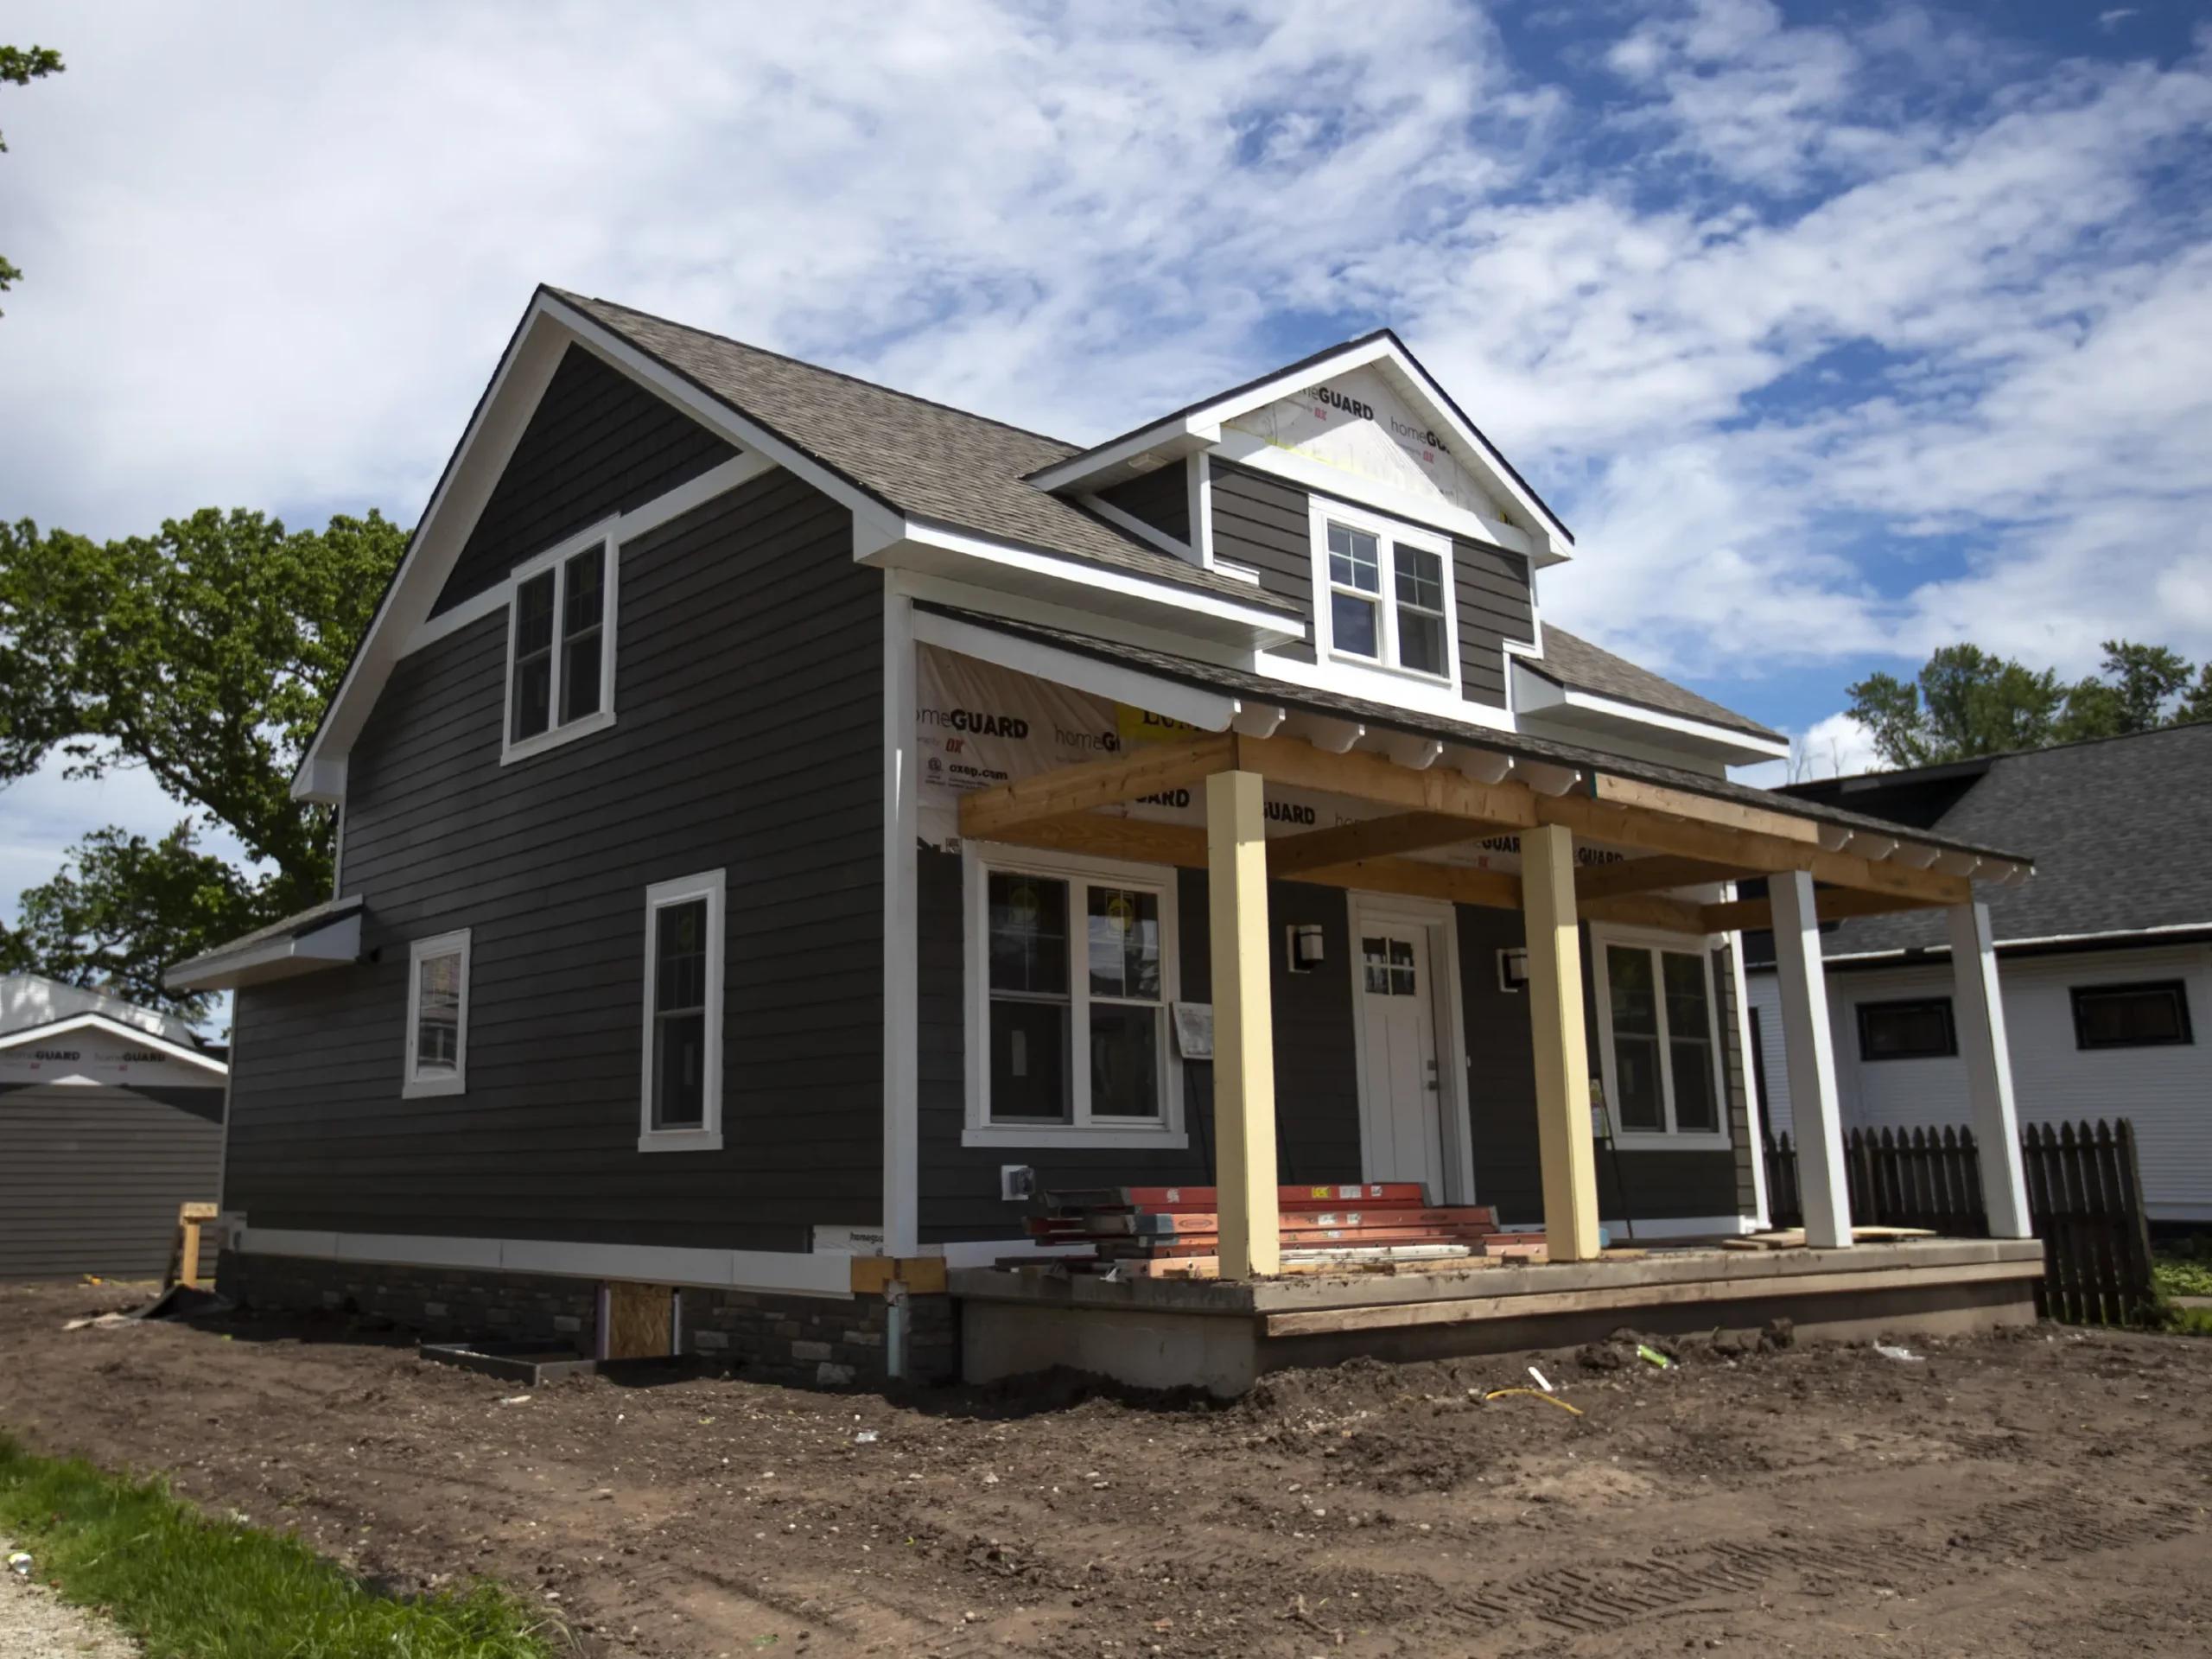 Low-interest loan programs promote home construction